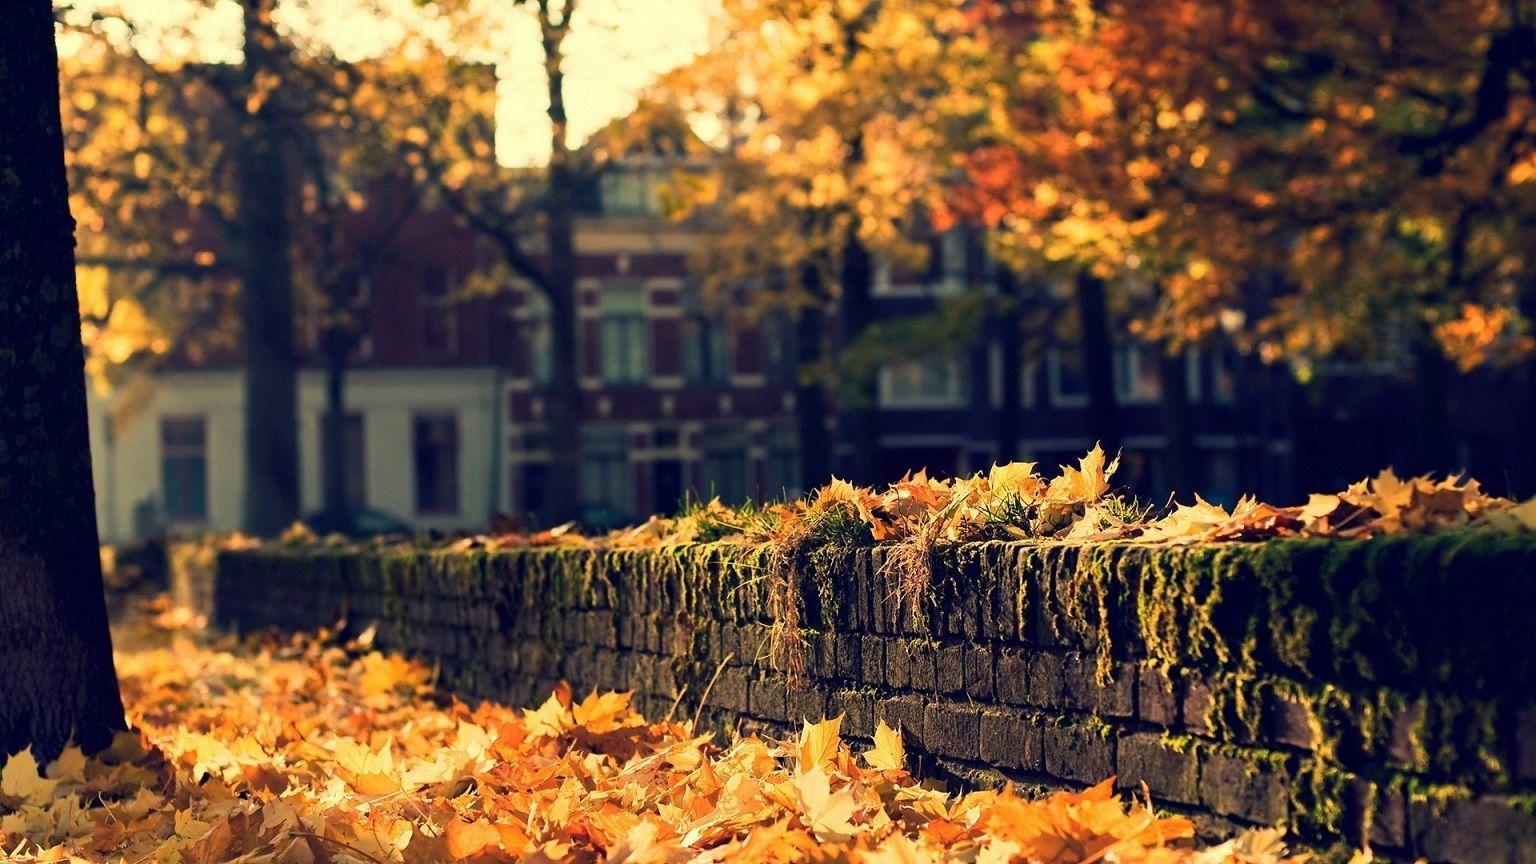 Autumn in the City Desktop Wallpaper at